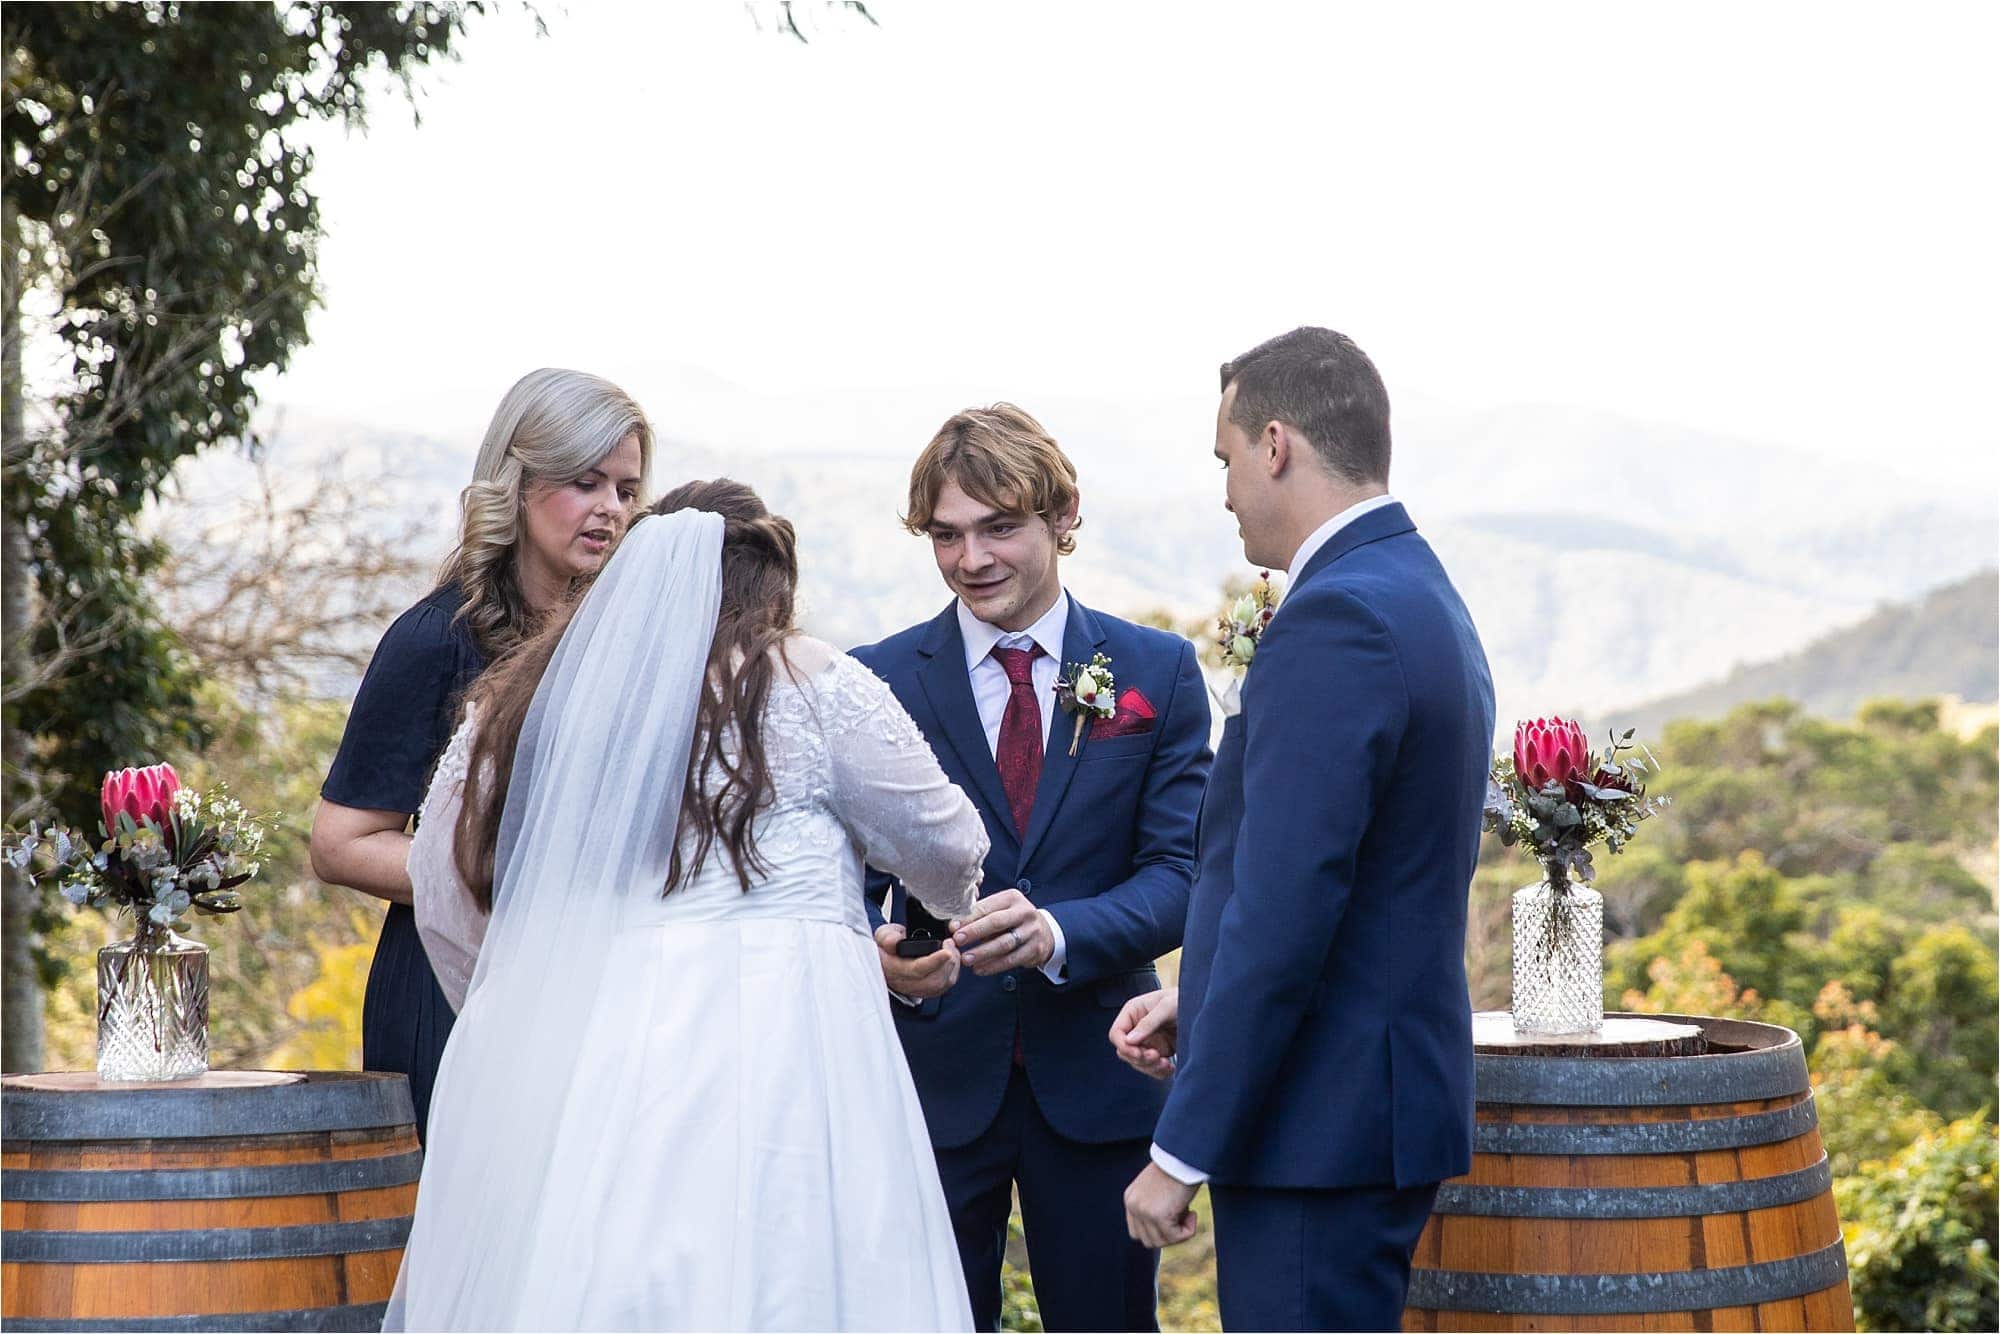 Tamborine Wedding photographer st bernards hotel weddings exchanging rings in a wedding ceremony